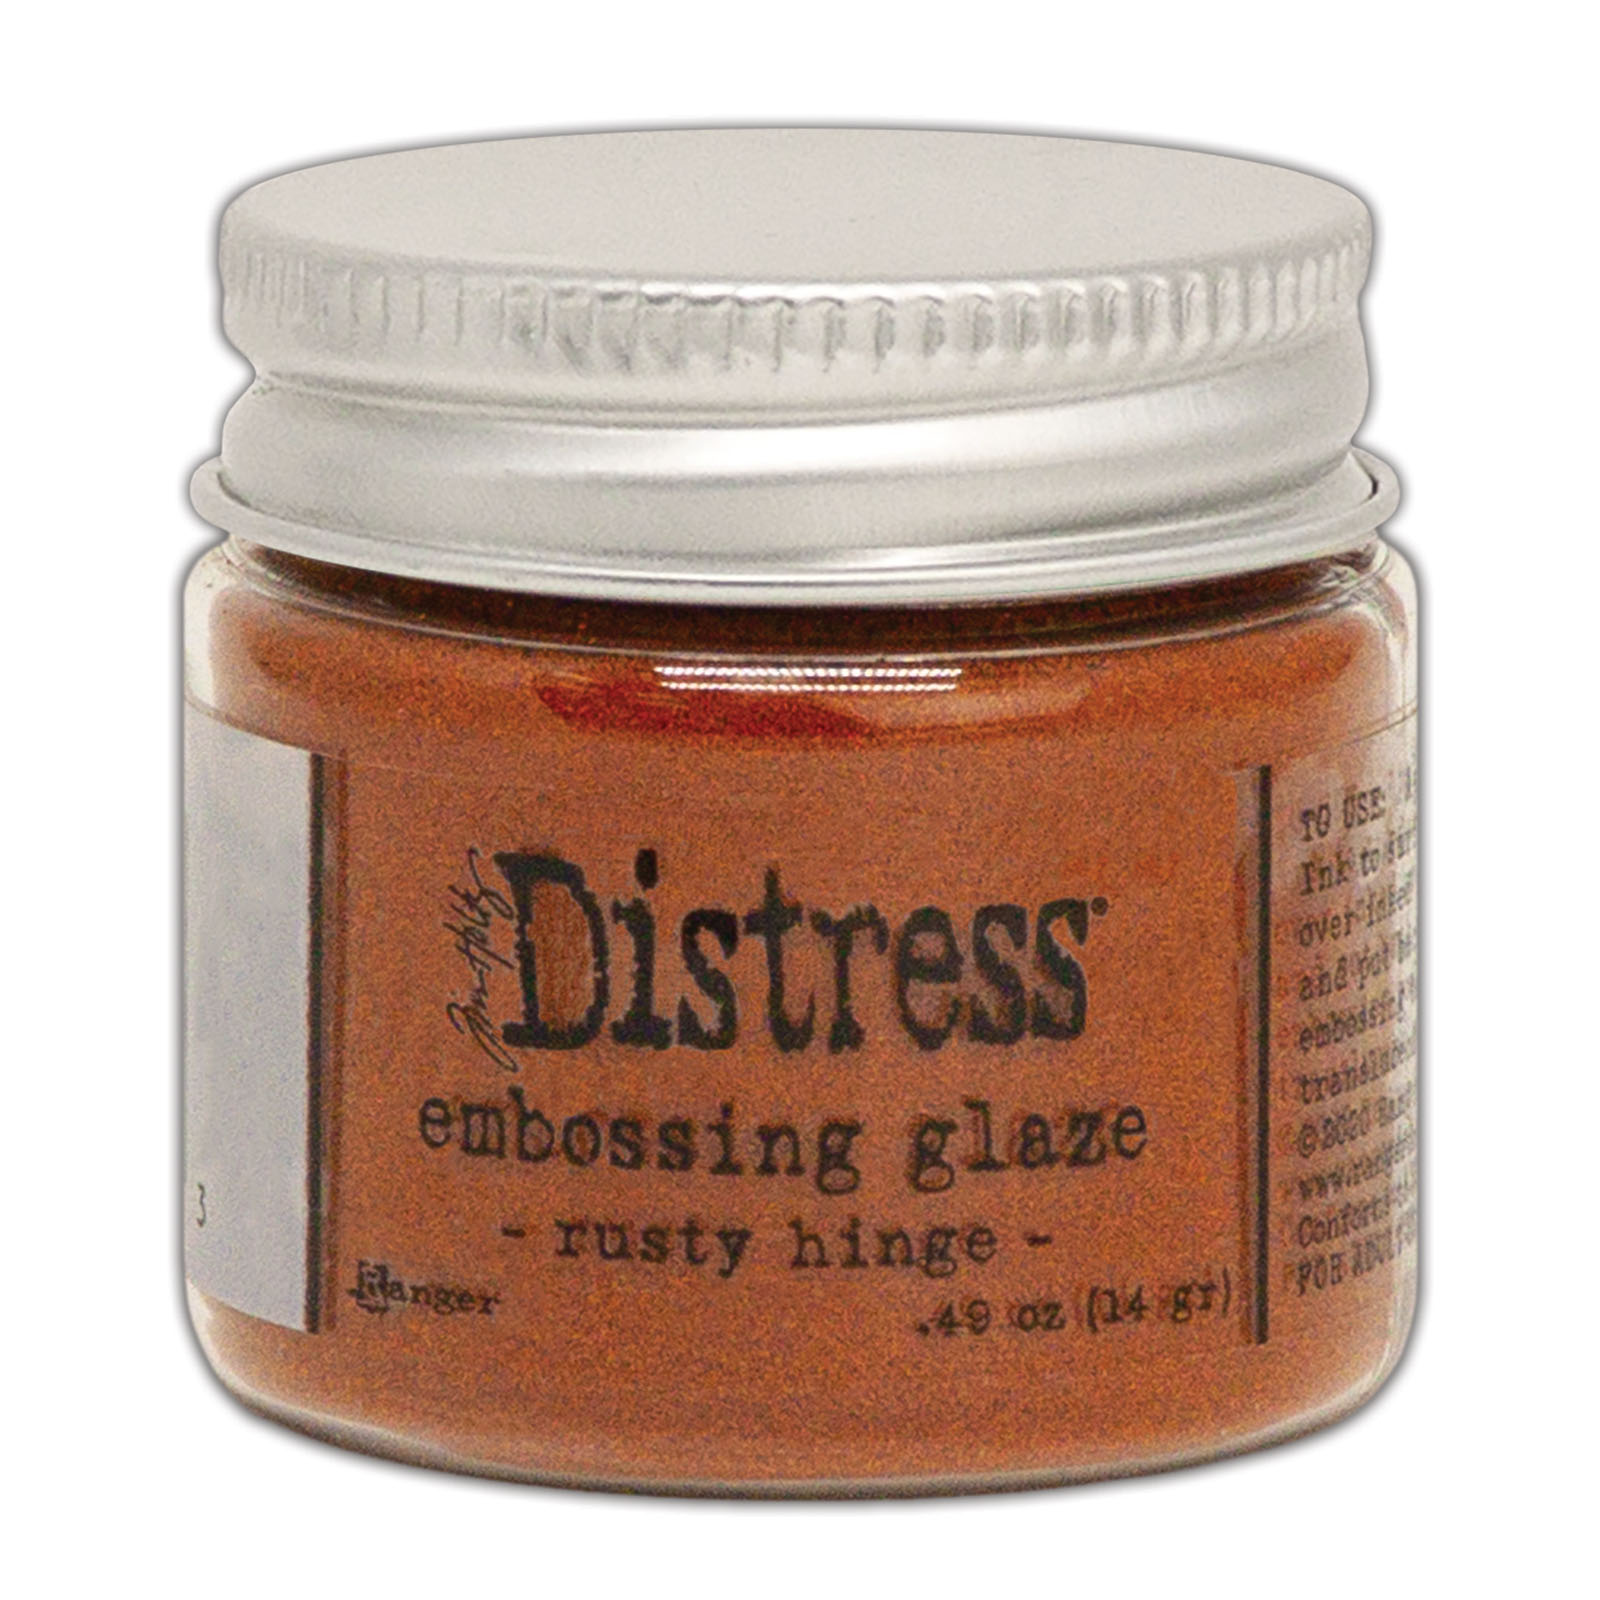 Ranger • Distress embossing glaze Rusty hinge